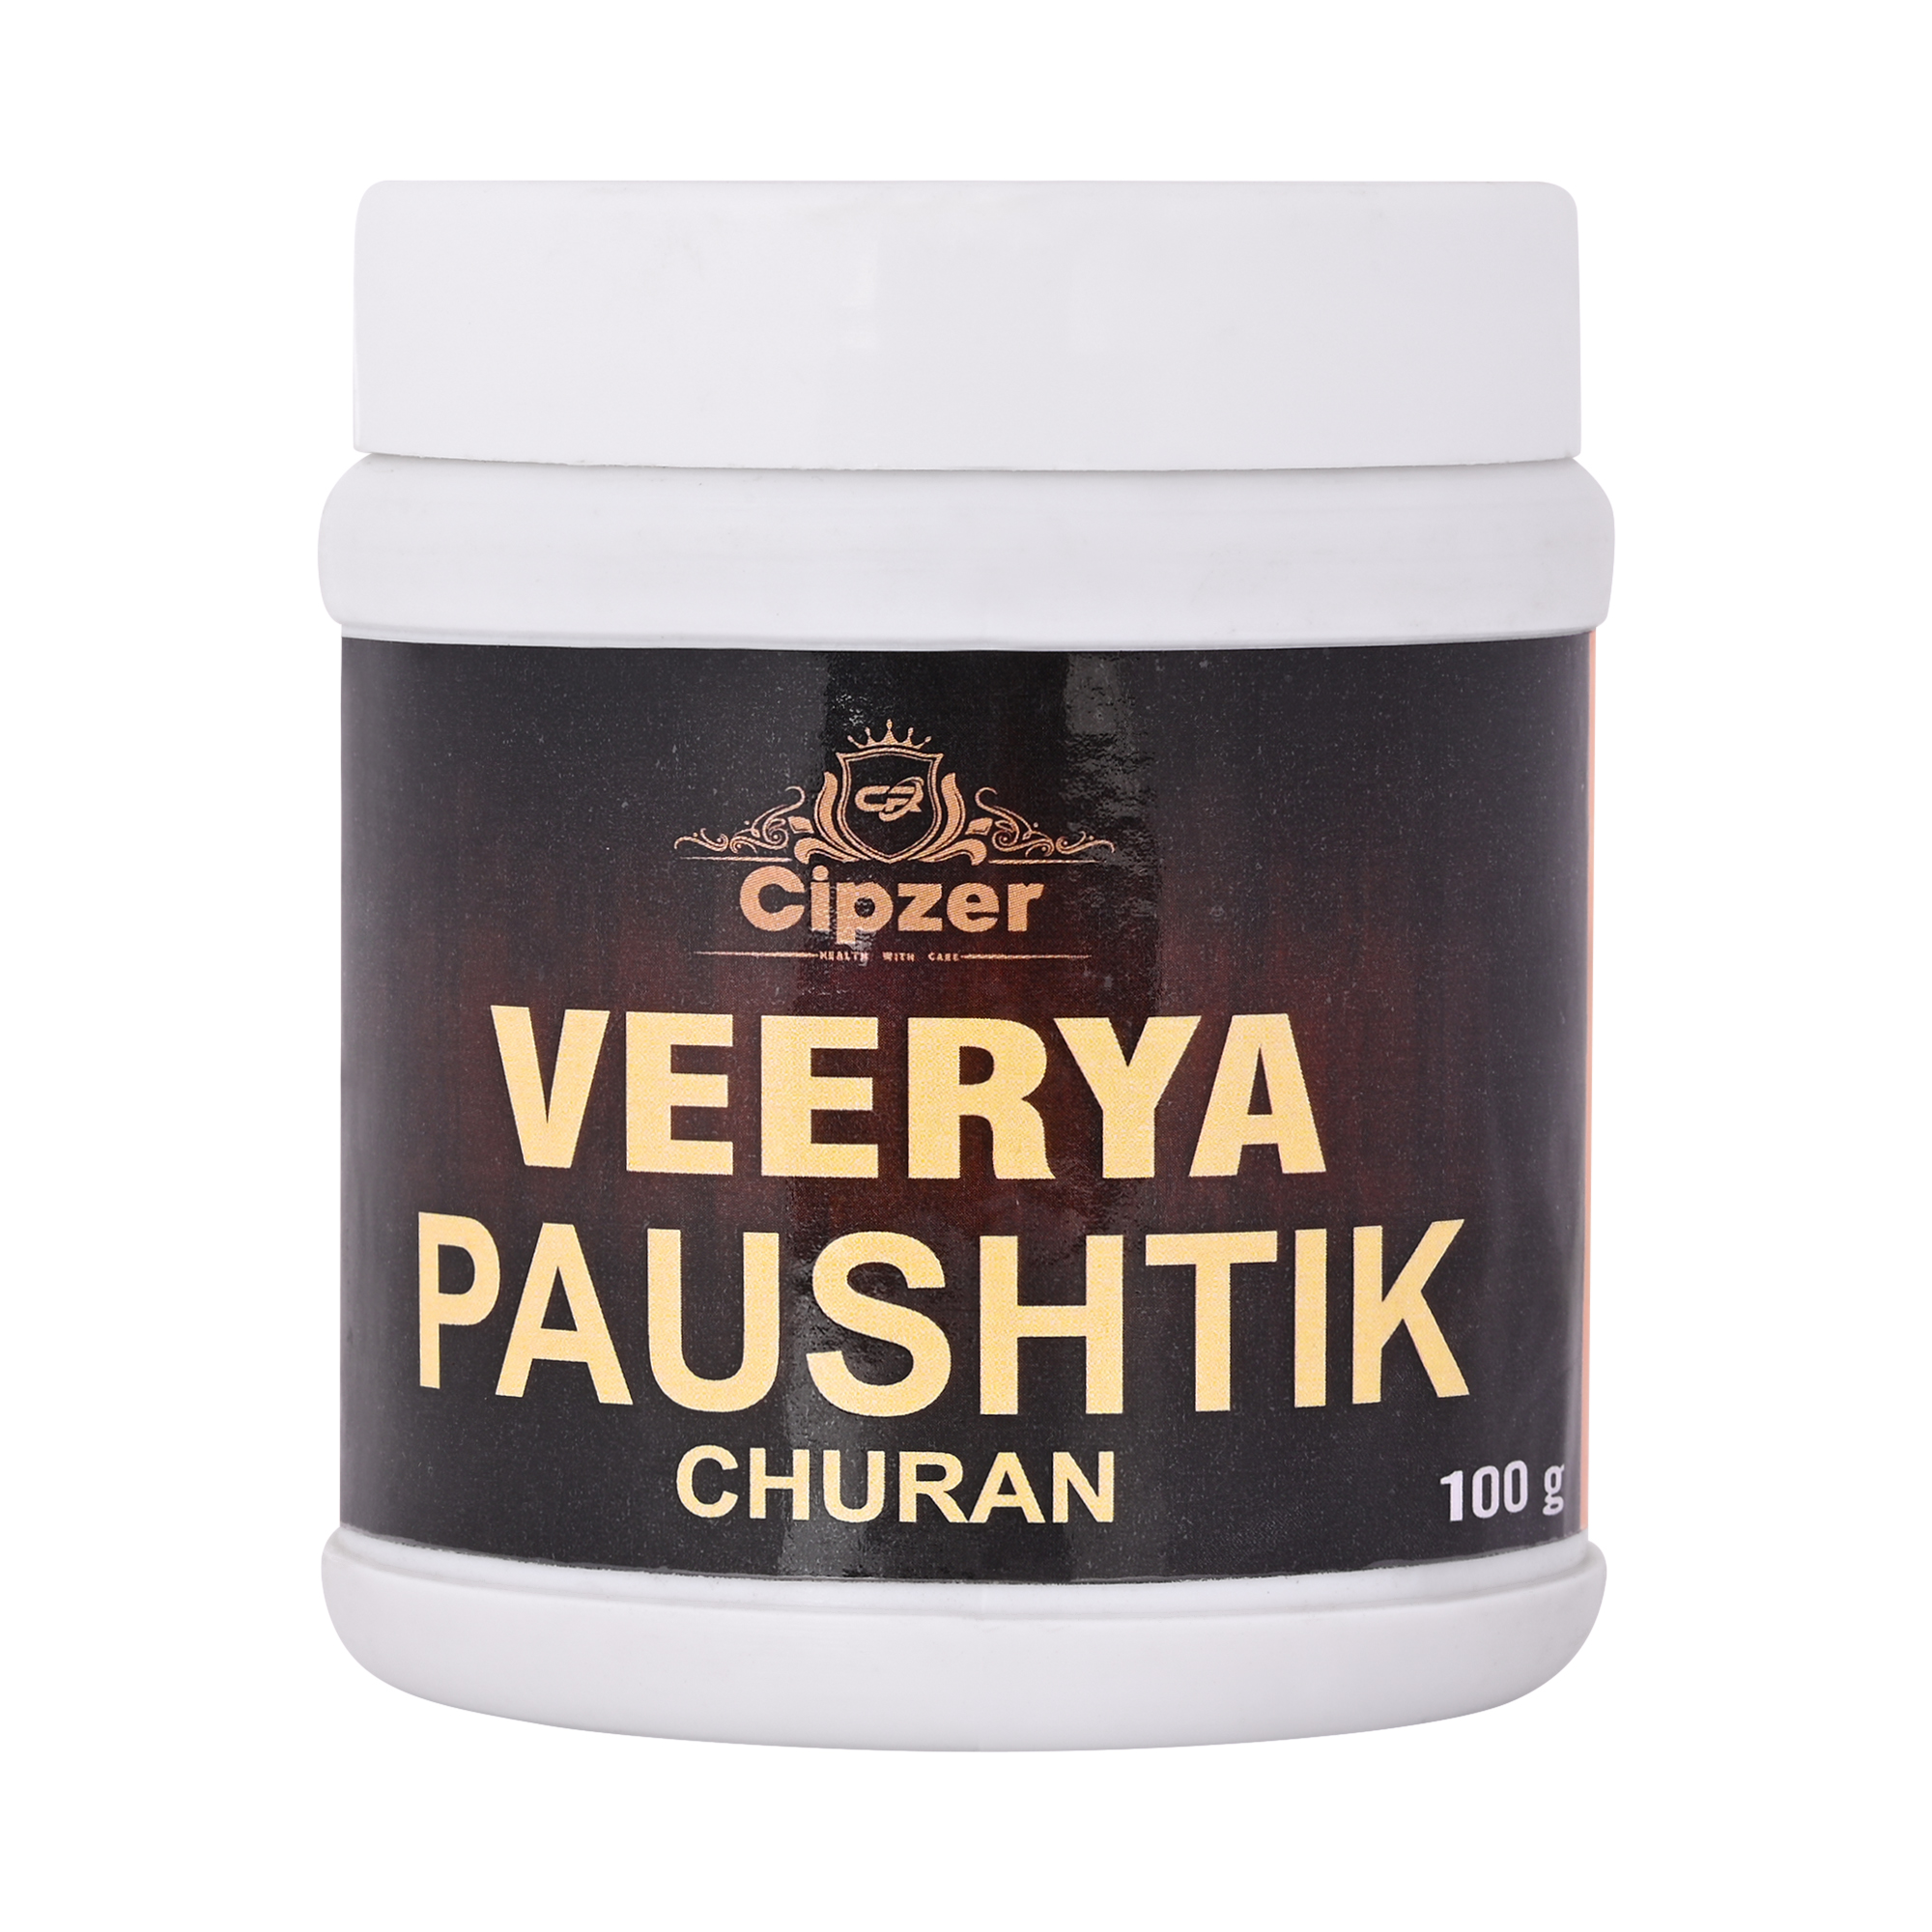 Buy Cipzer Veerya Paushtik Churan at Best Price Online